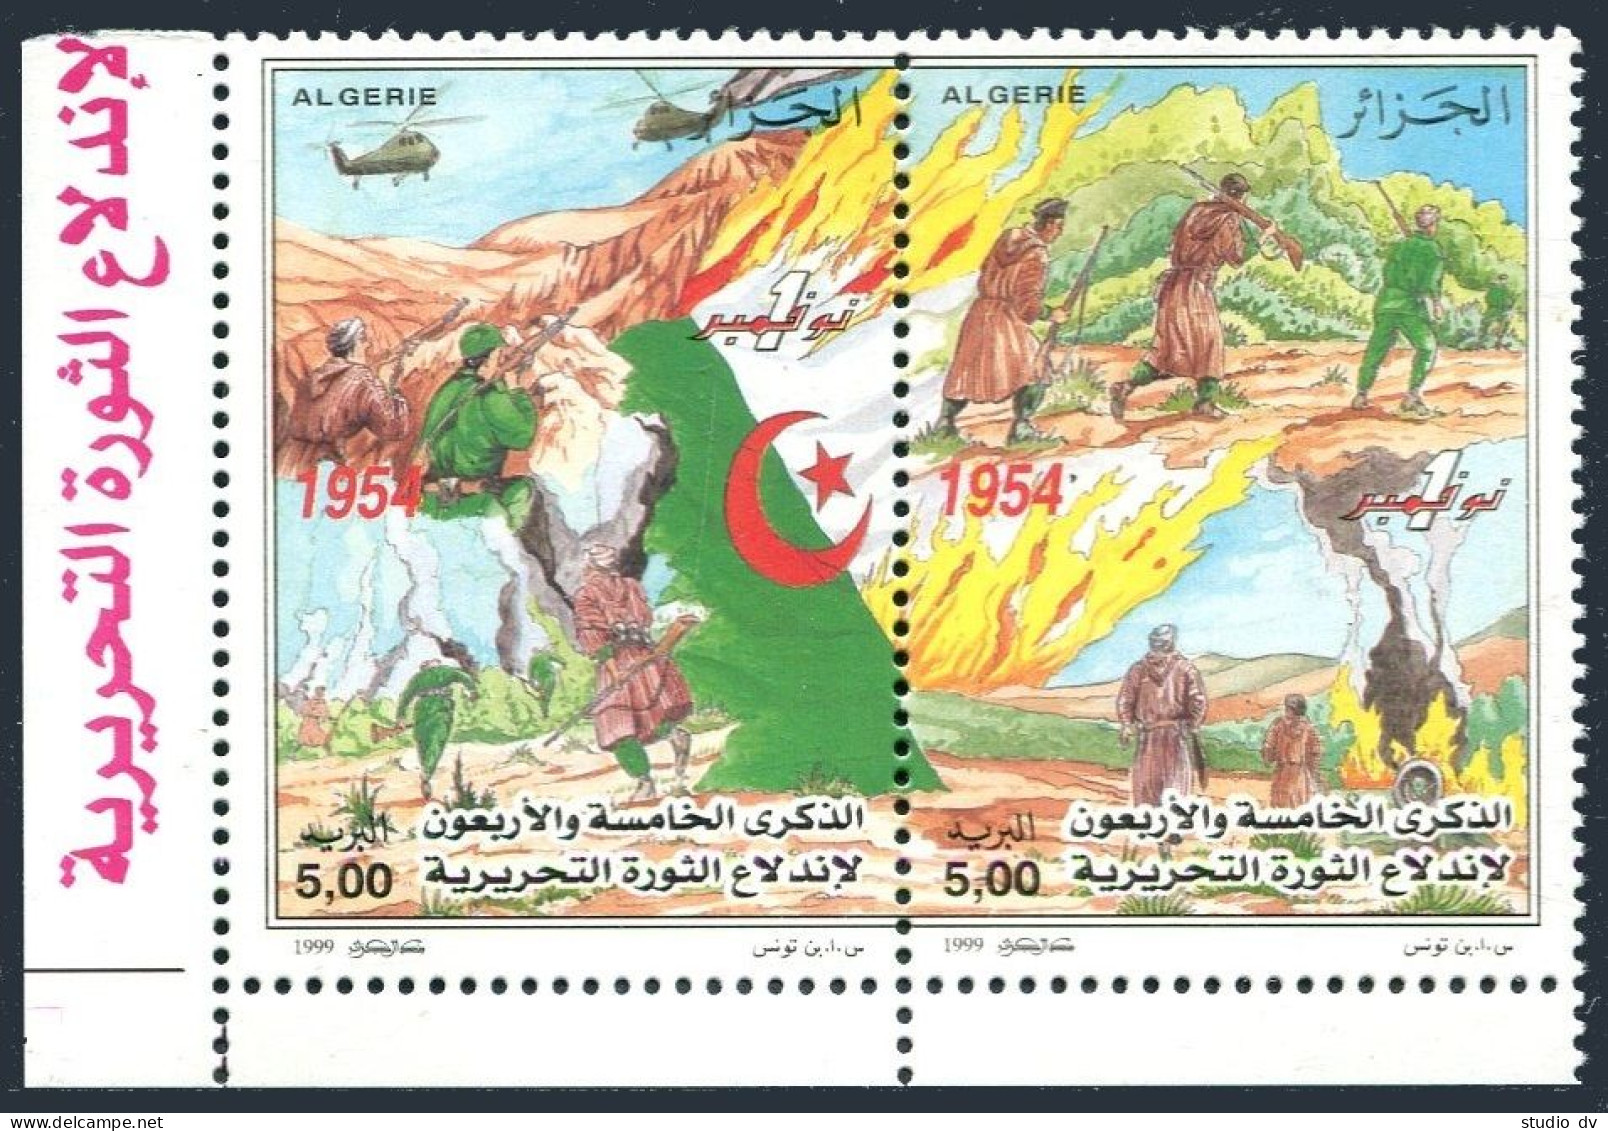 Algeria 1169 Ab Pair, MNH. Algerian Revolution, 45th Ann. 1999. Helicopters. - Algerien (1962-...)